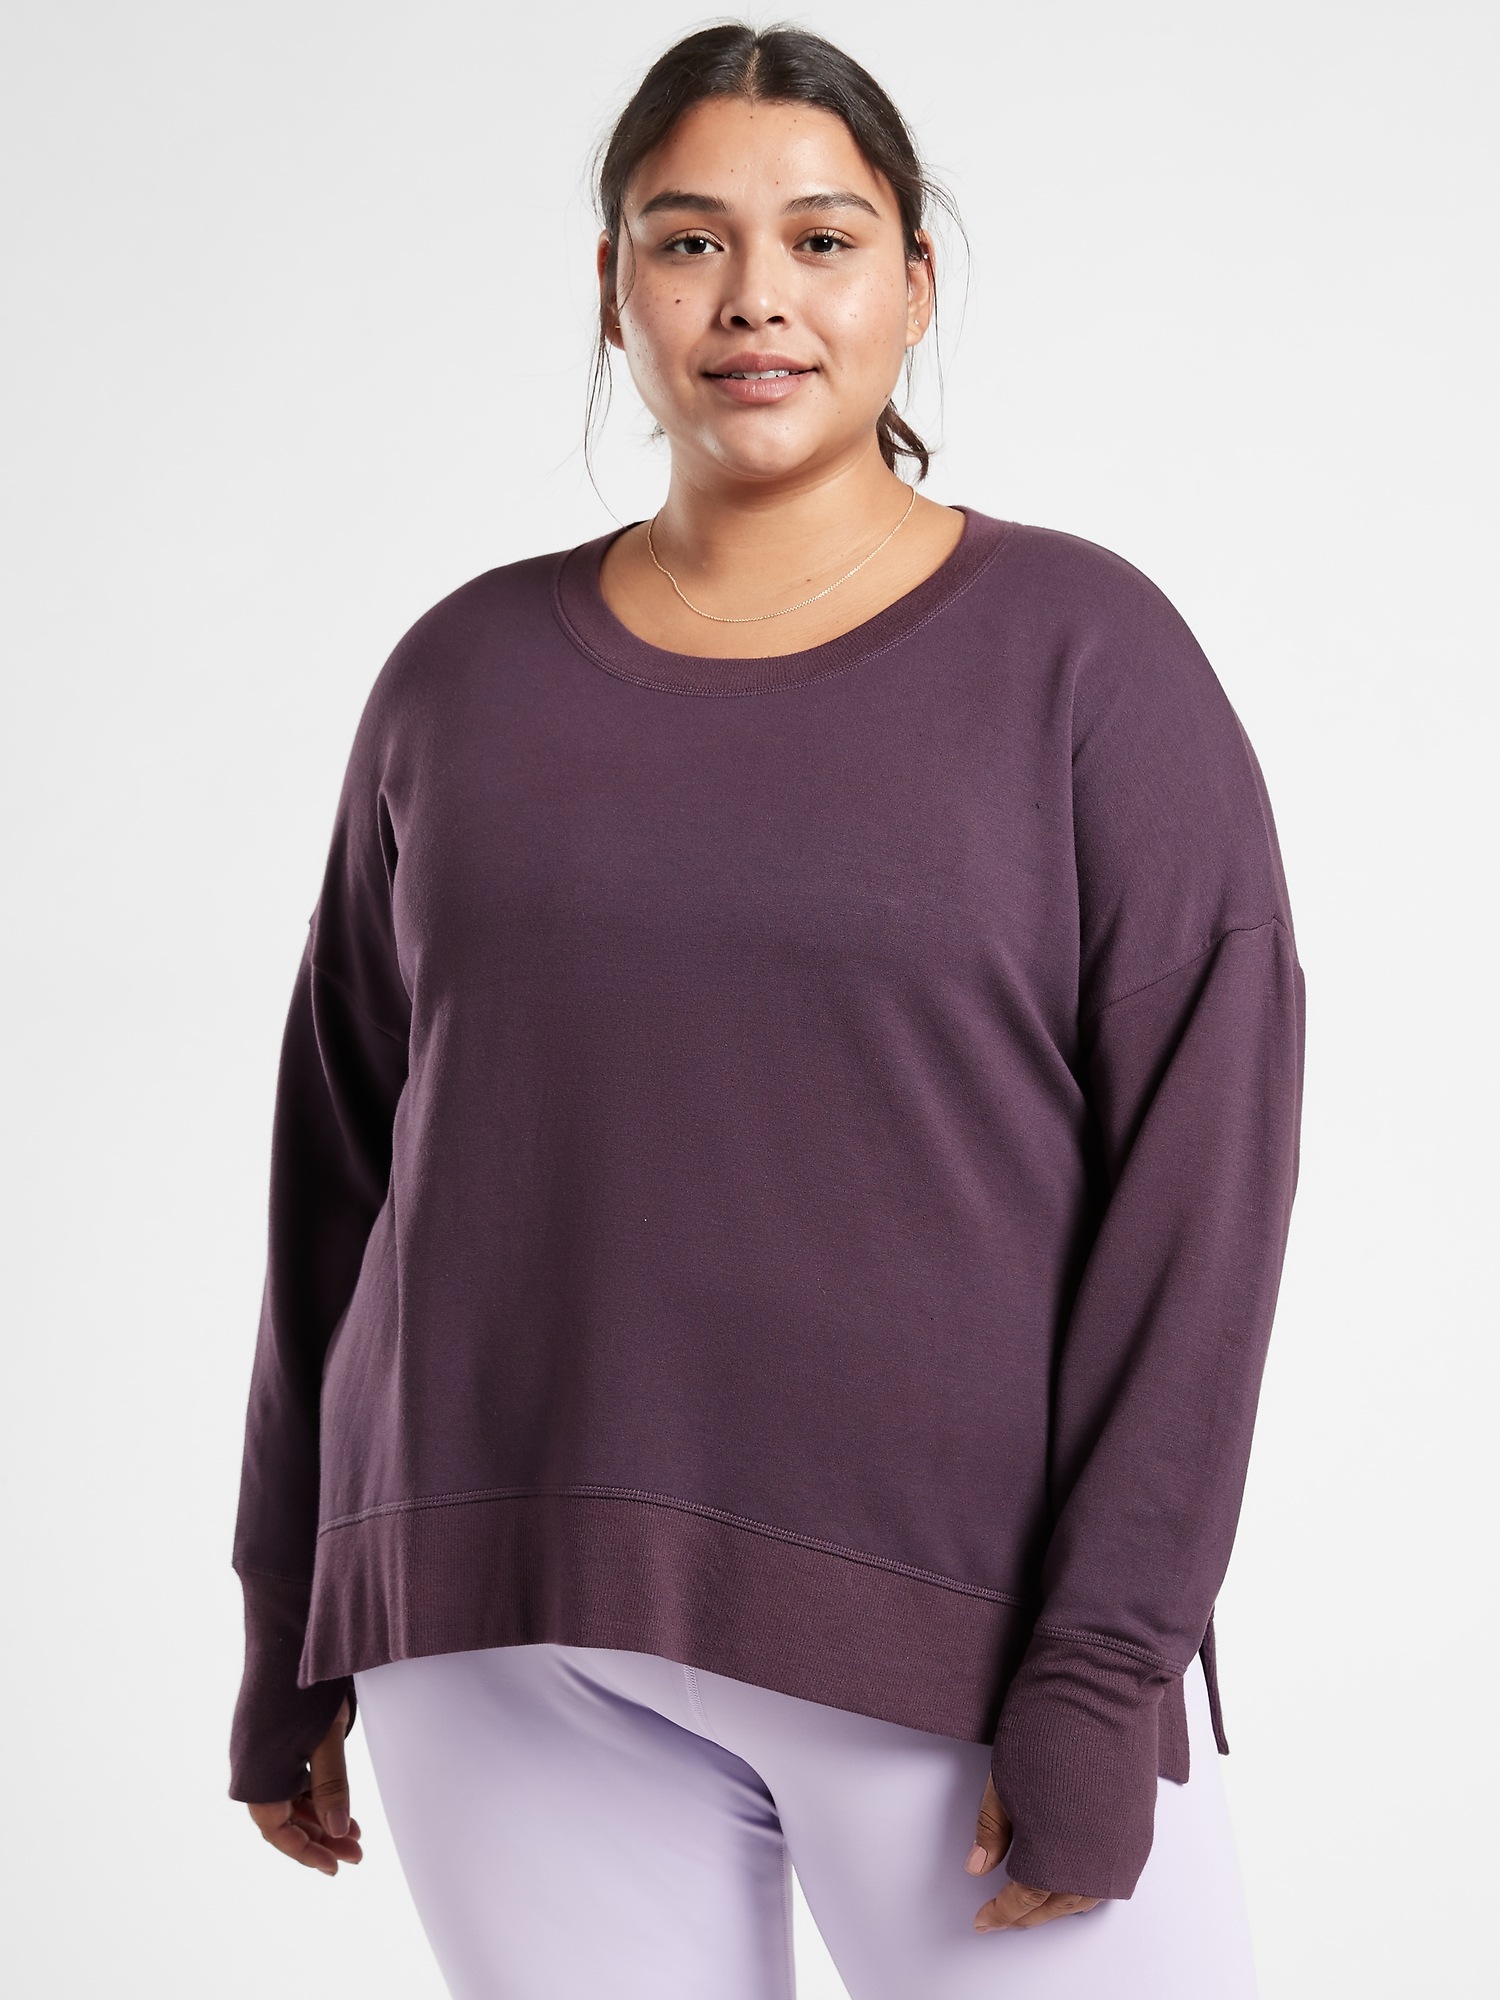 Coaster Luxe Sweatshirt | Athleta